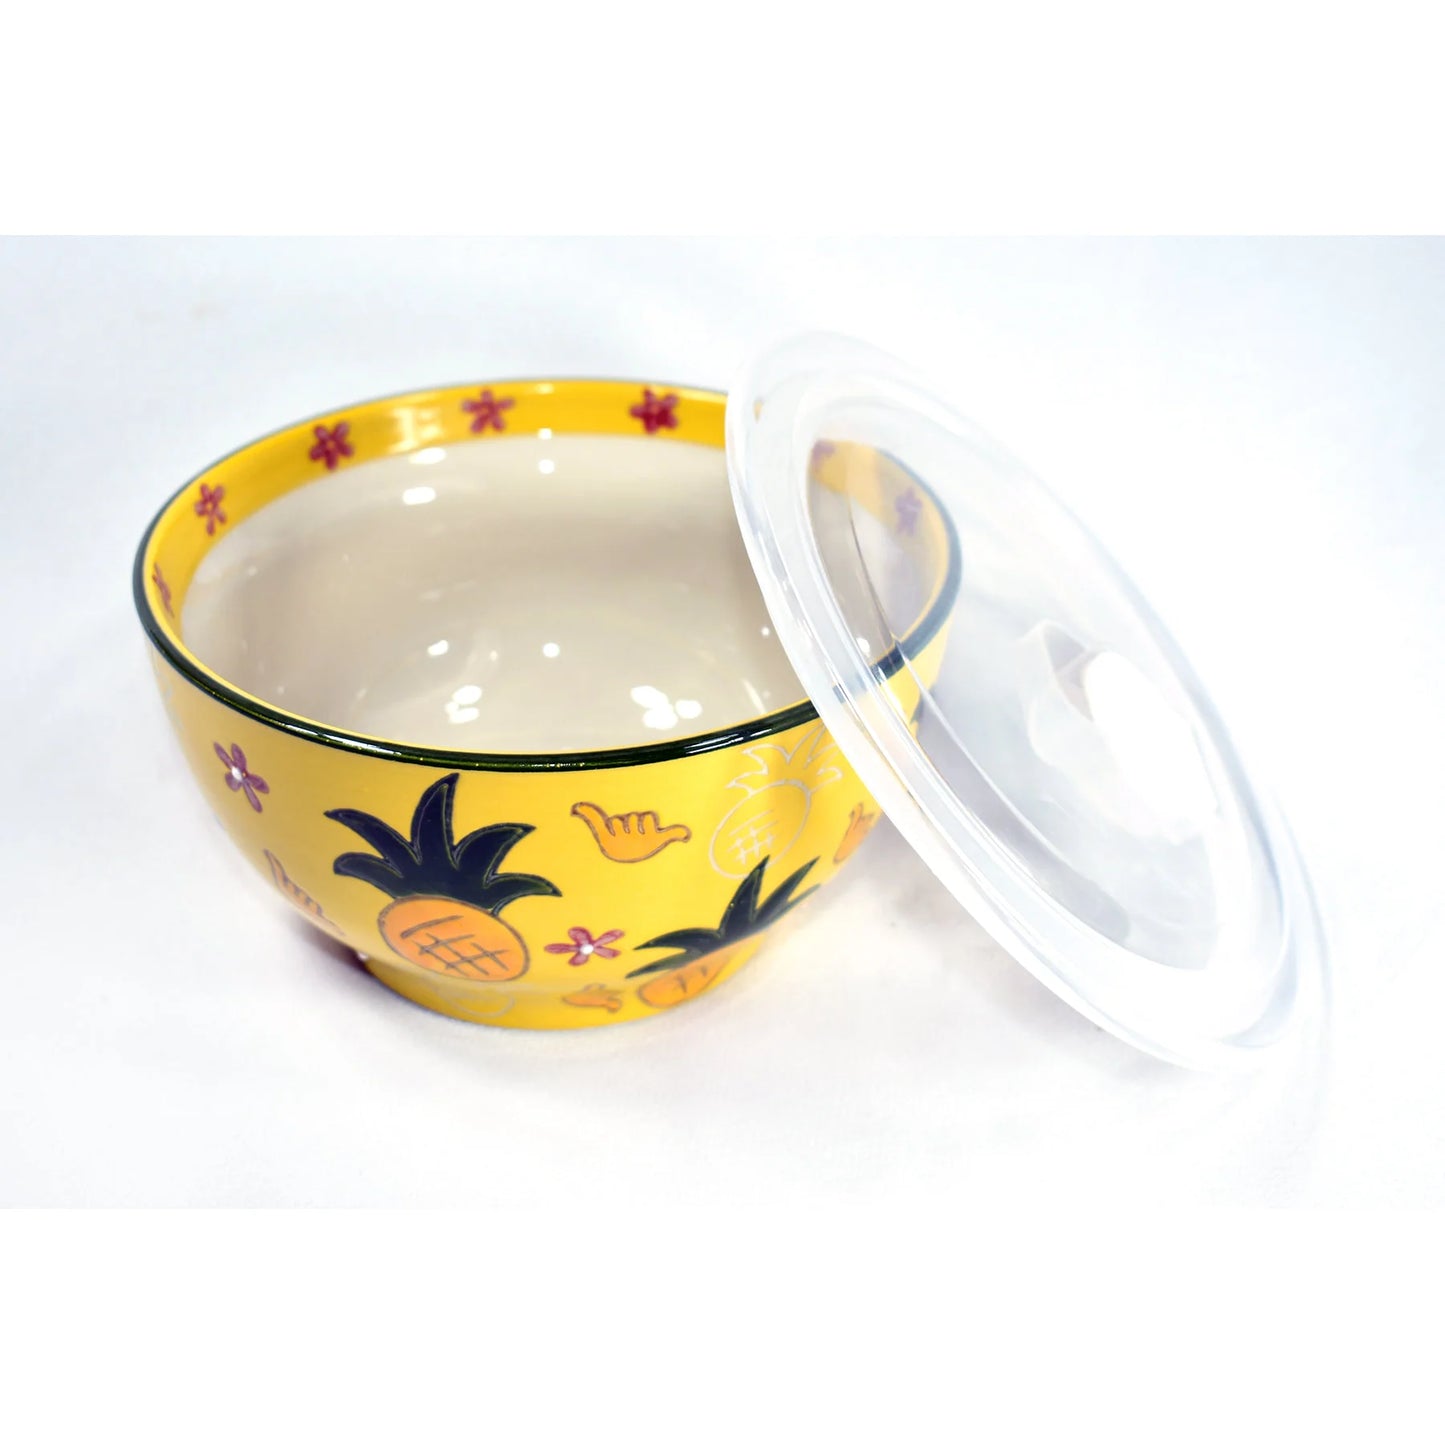 Microwaveable Ceramic Bowl & Lid (4 designs)